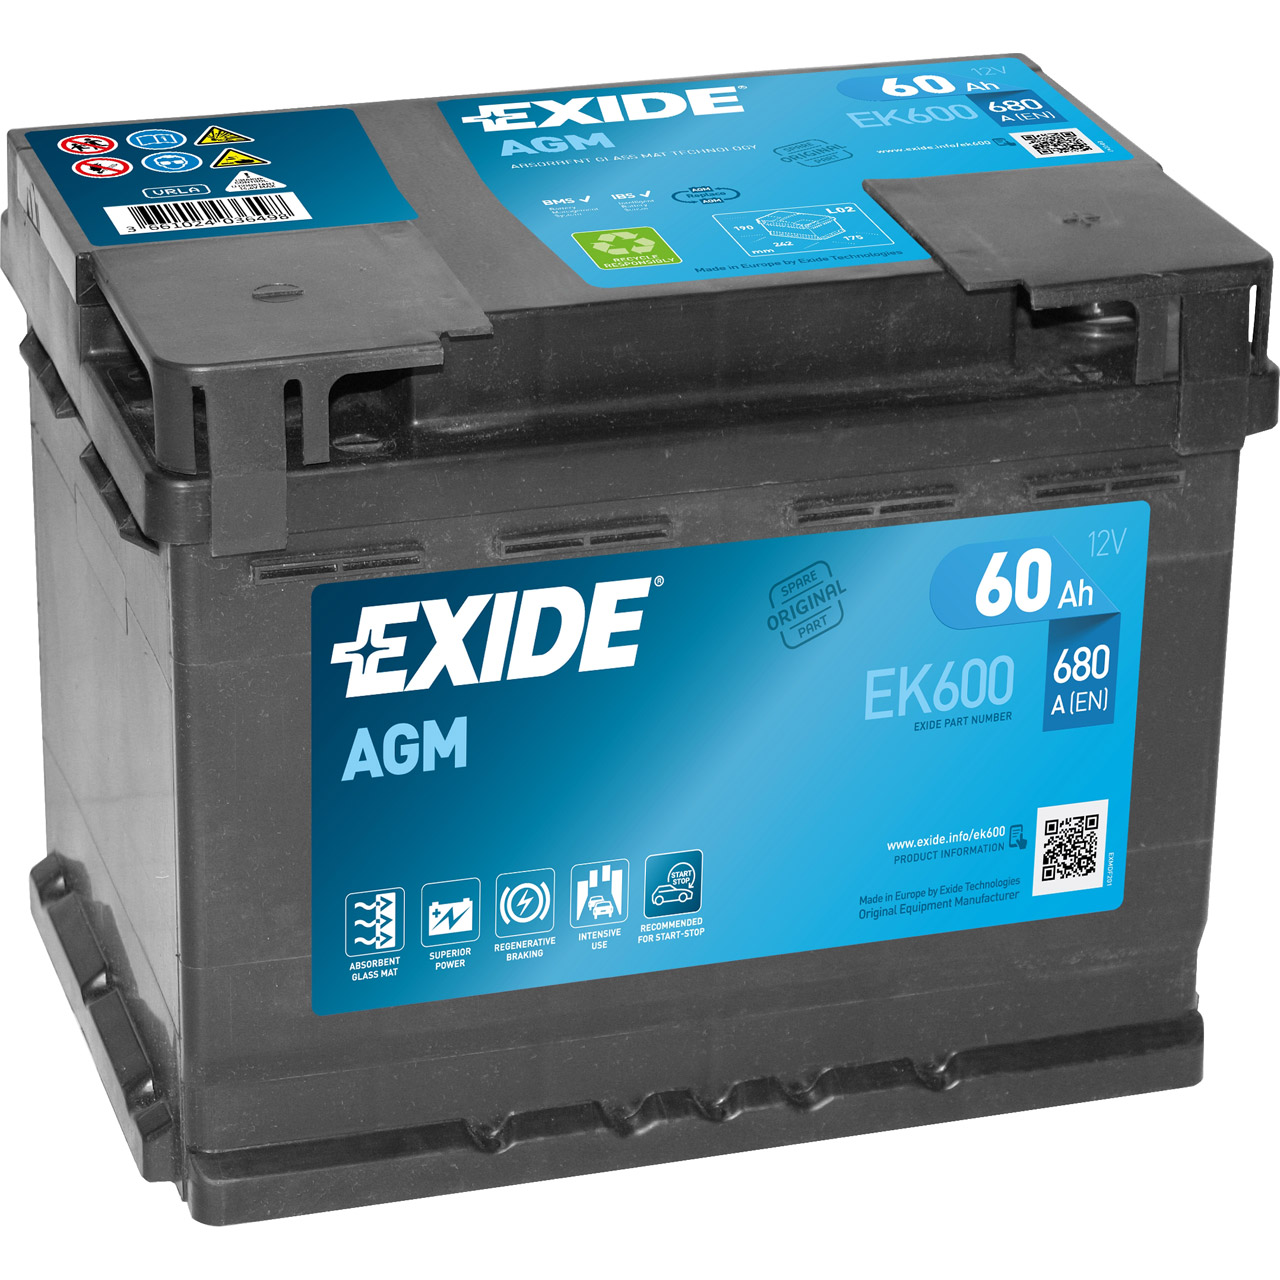 EXIDE Starterbatterien / Autobatterien - EK600 